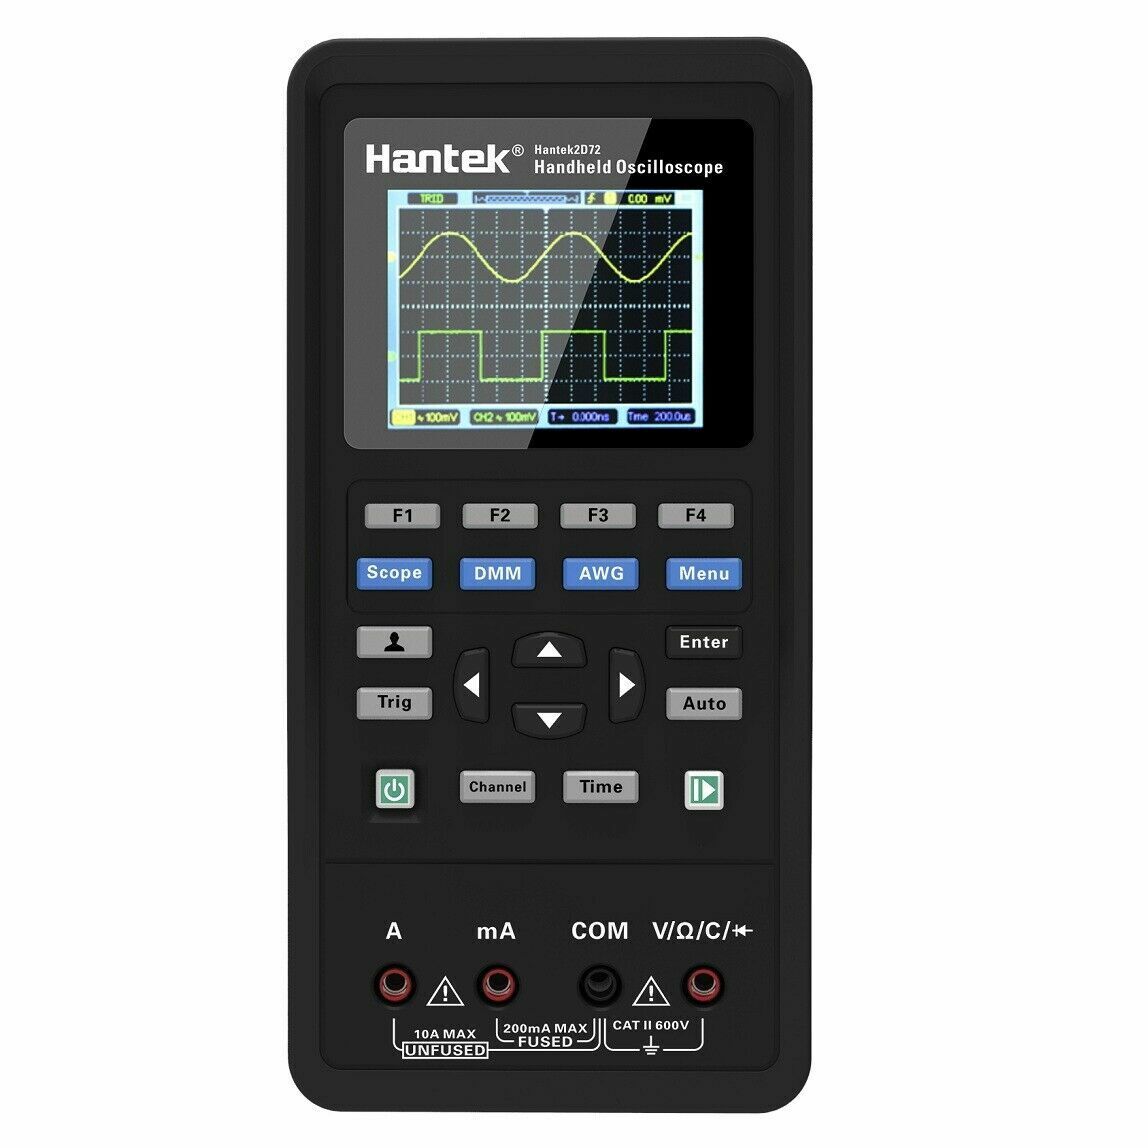 US Hantek Handheld Oscilloscope 2D72 2CH 70MHz+Multimeter + Signal Generator